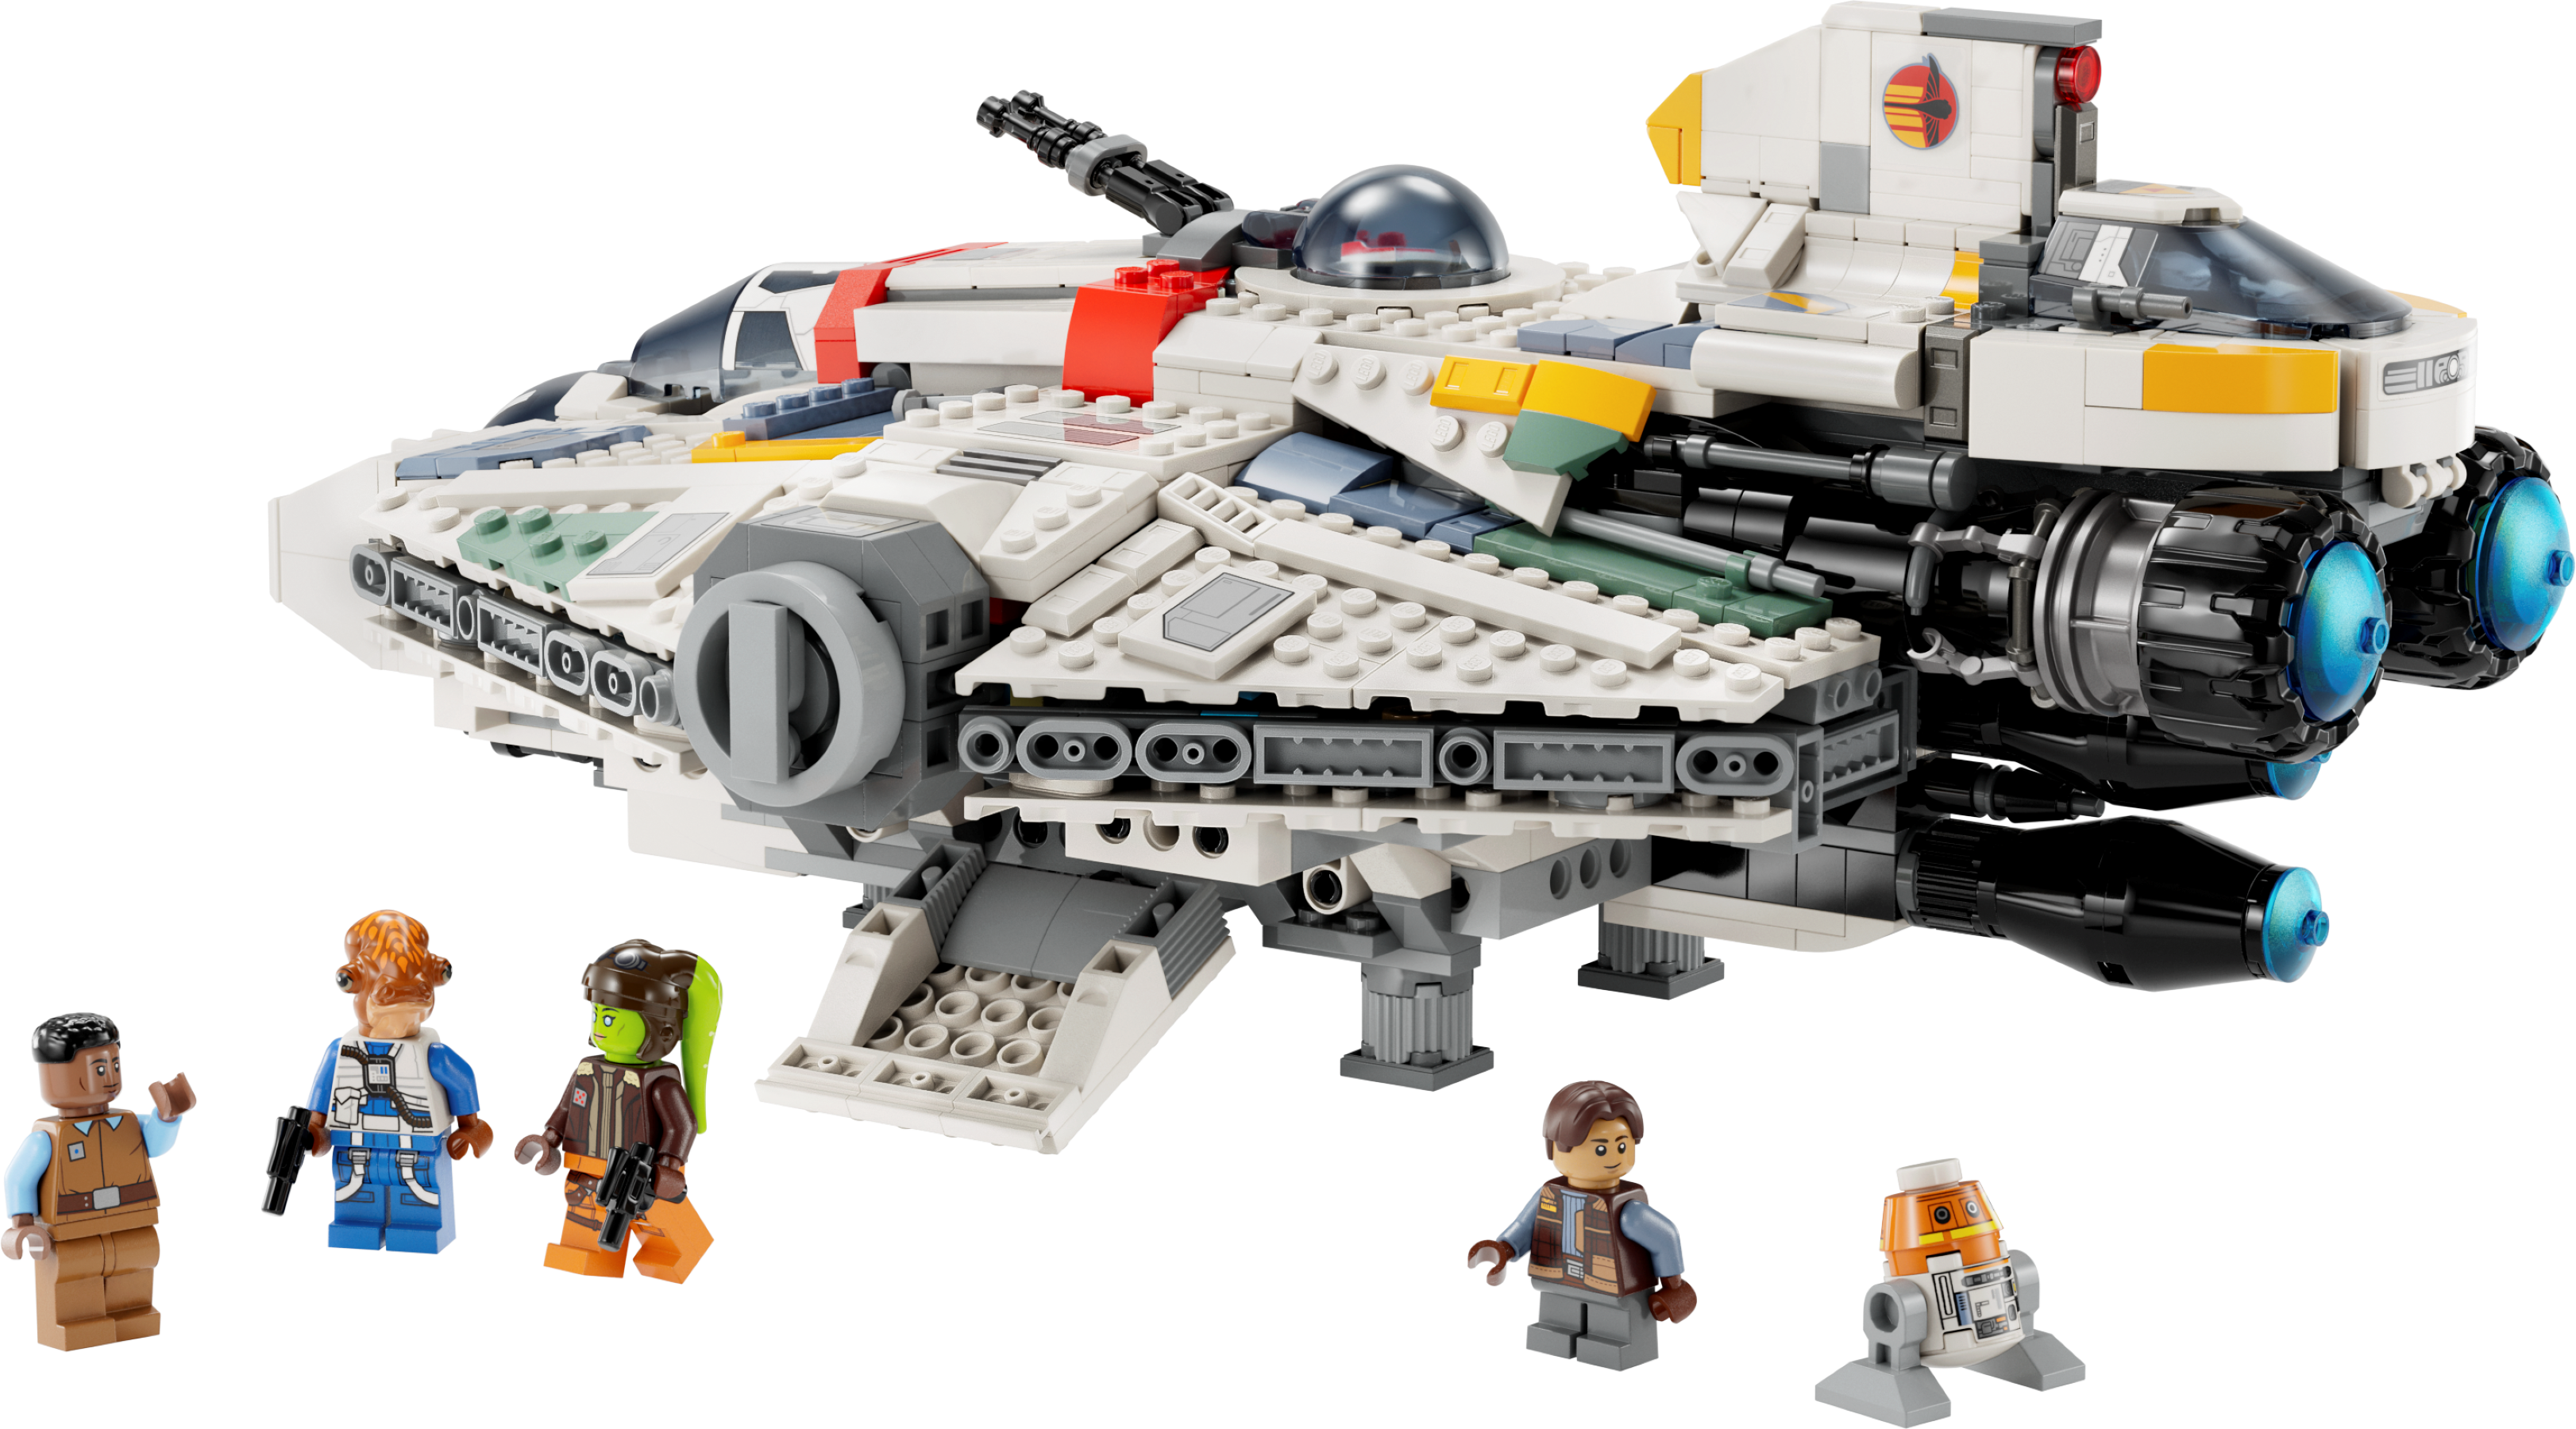 Lego Star Wars 332nd Ahsoka's Clone Trooper Battle Pack Building Toy 75359  : Target